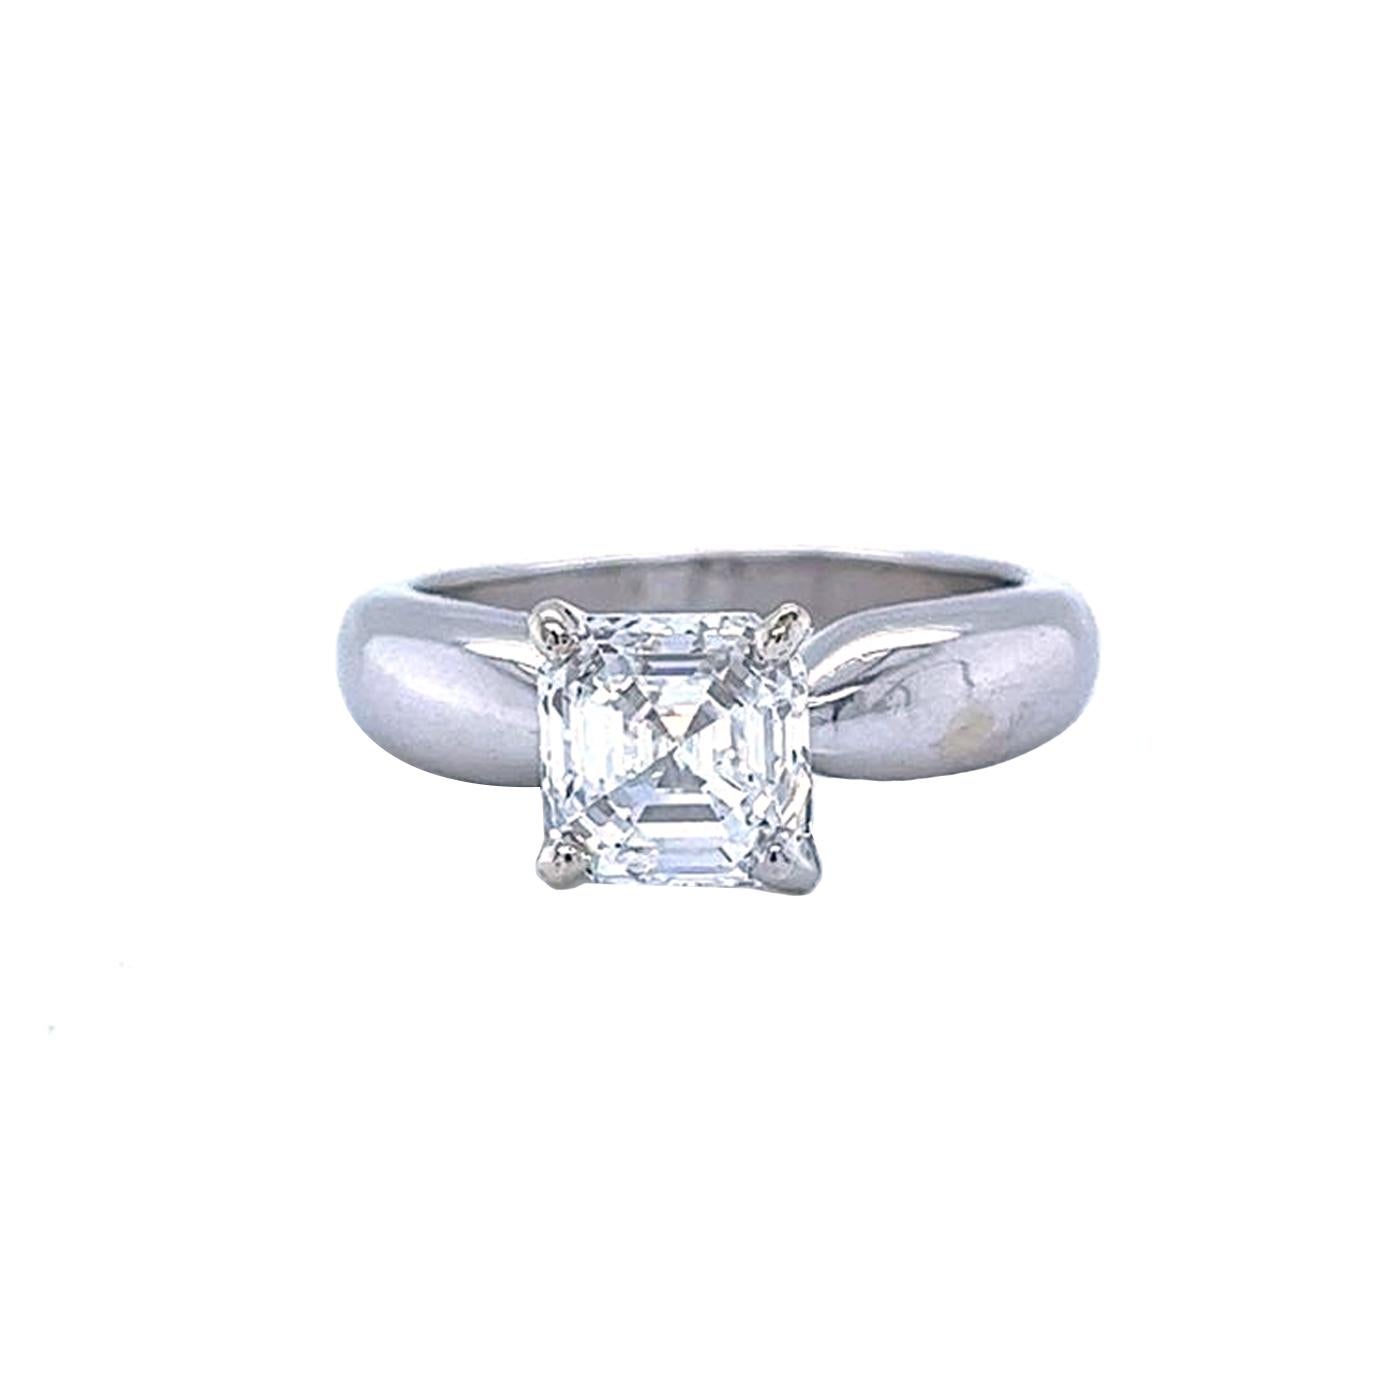 Modernist Flawless GIA Certified 2.01 Carat Asscher Cut Diamond Ring 18 Karat White Gold For Sale